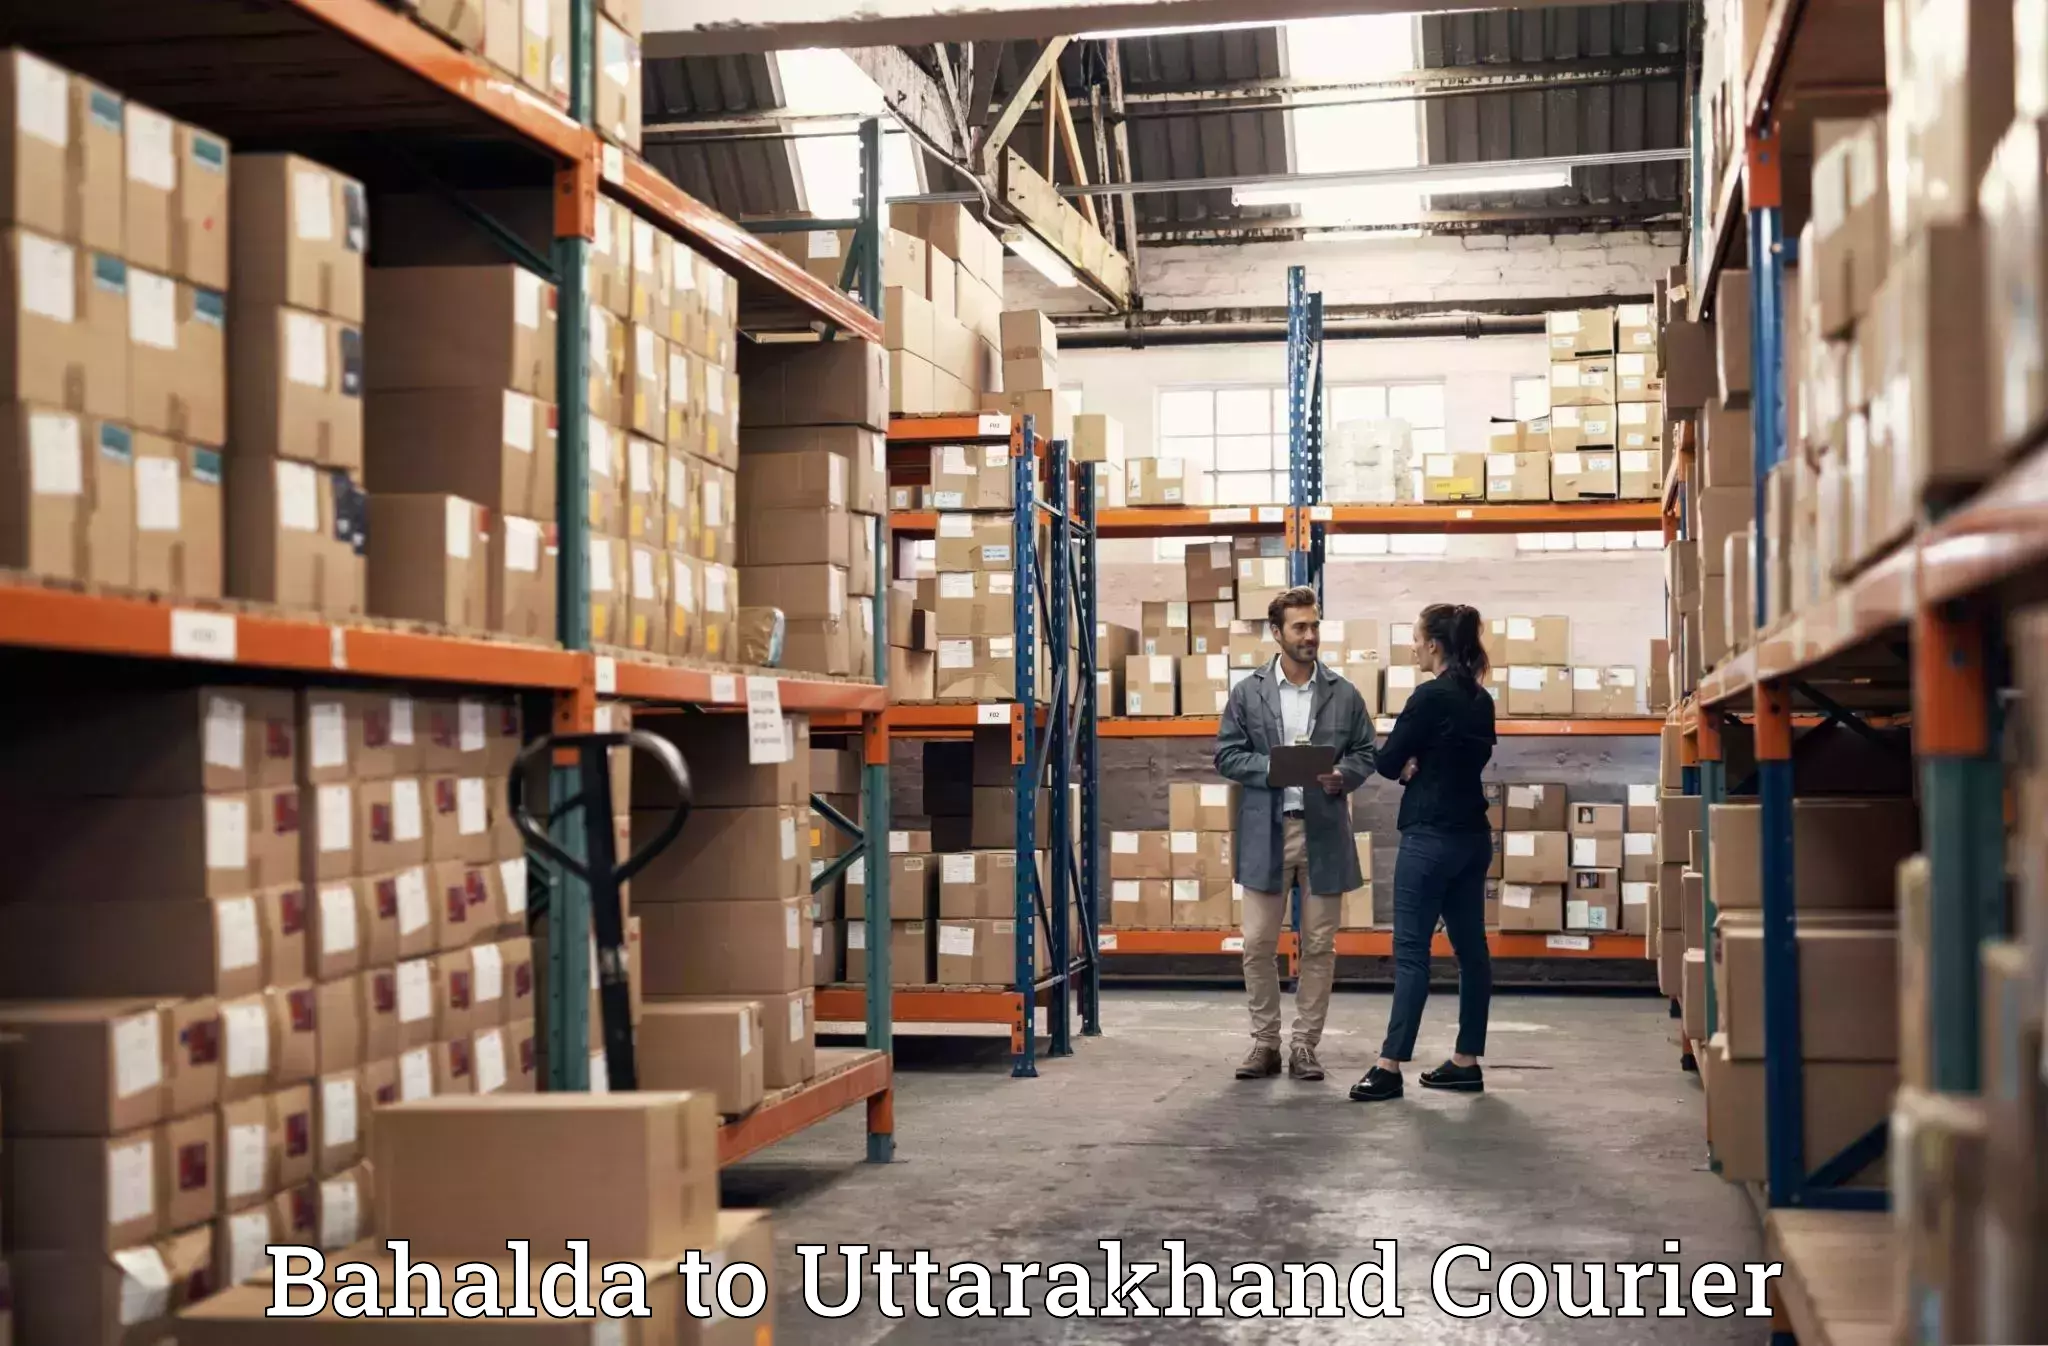 Trusted moving company Bahalda to Bhagwanpur